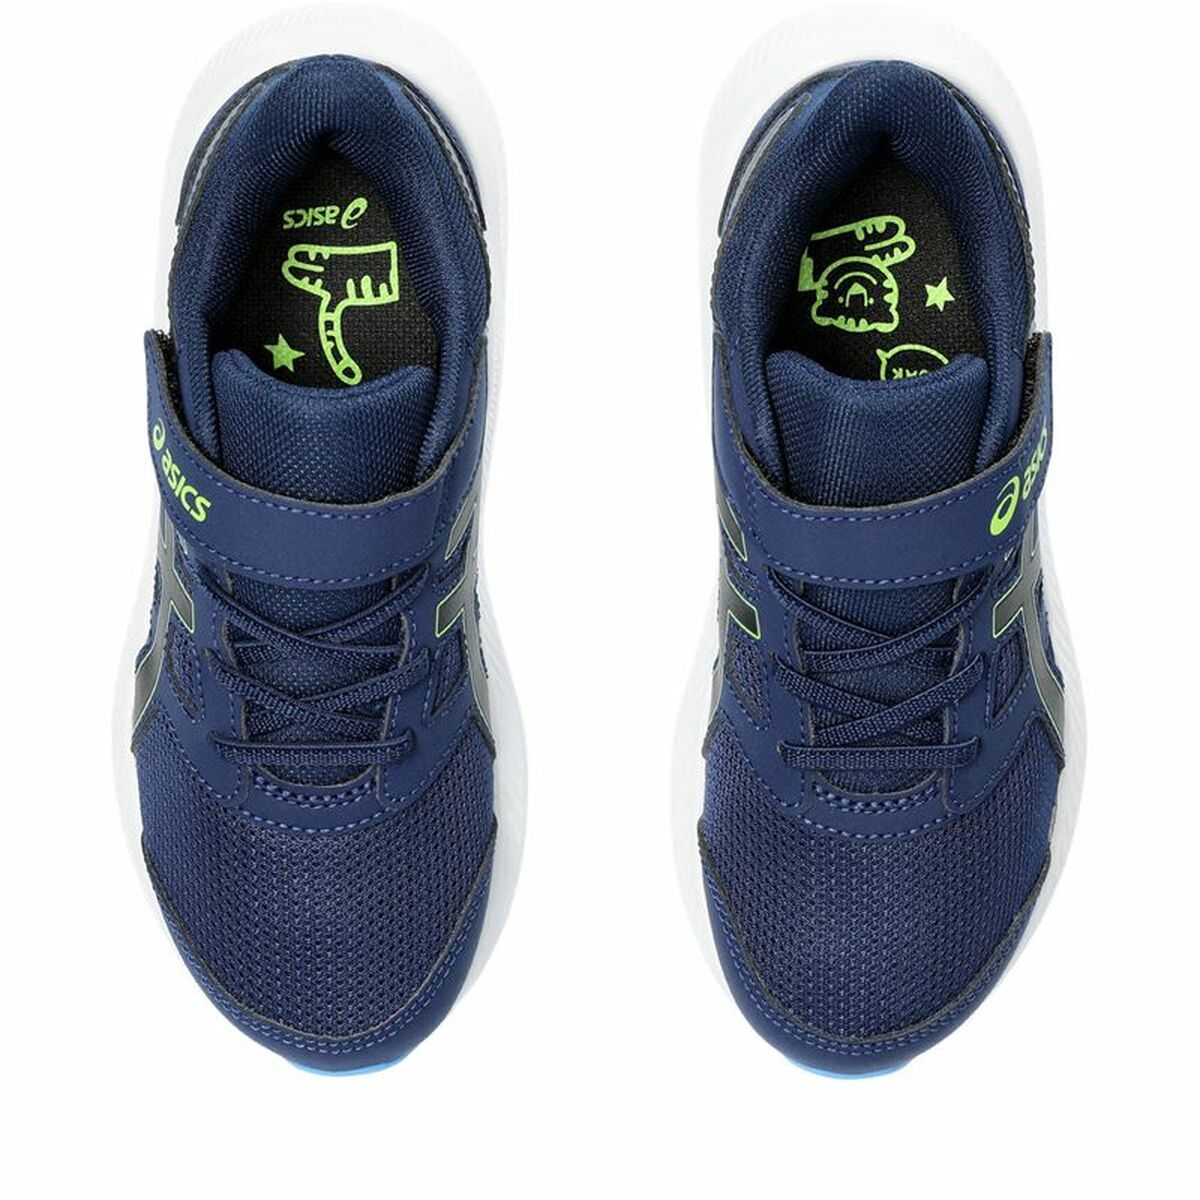 Running Shoes for Kids Asics Jolt 4 Ps Blue Black